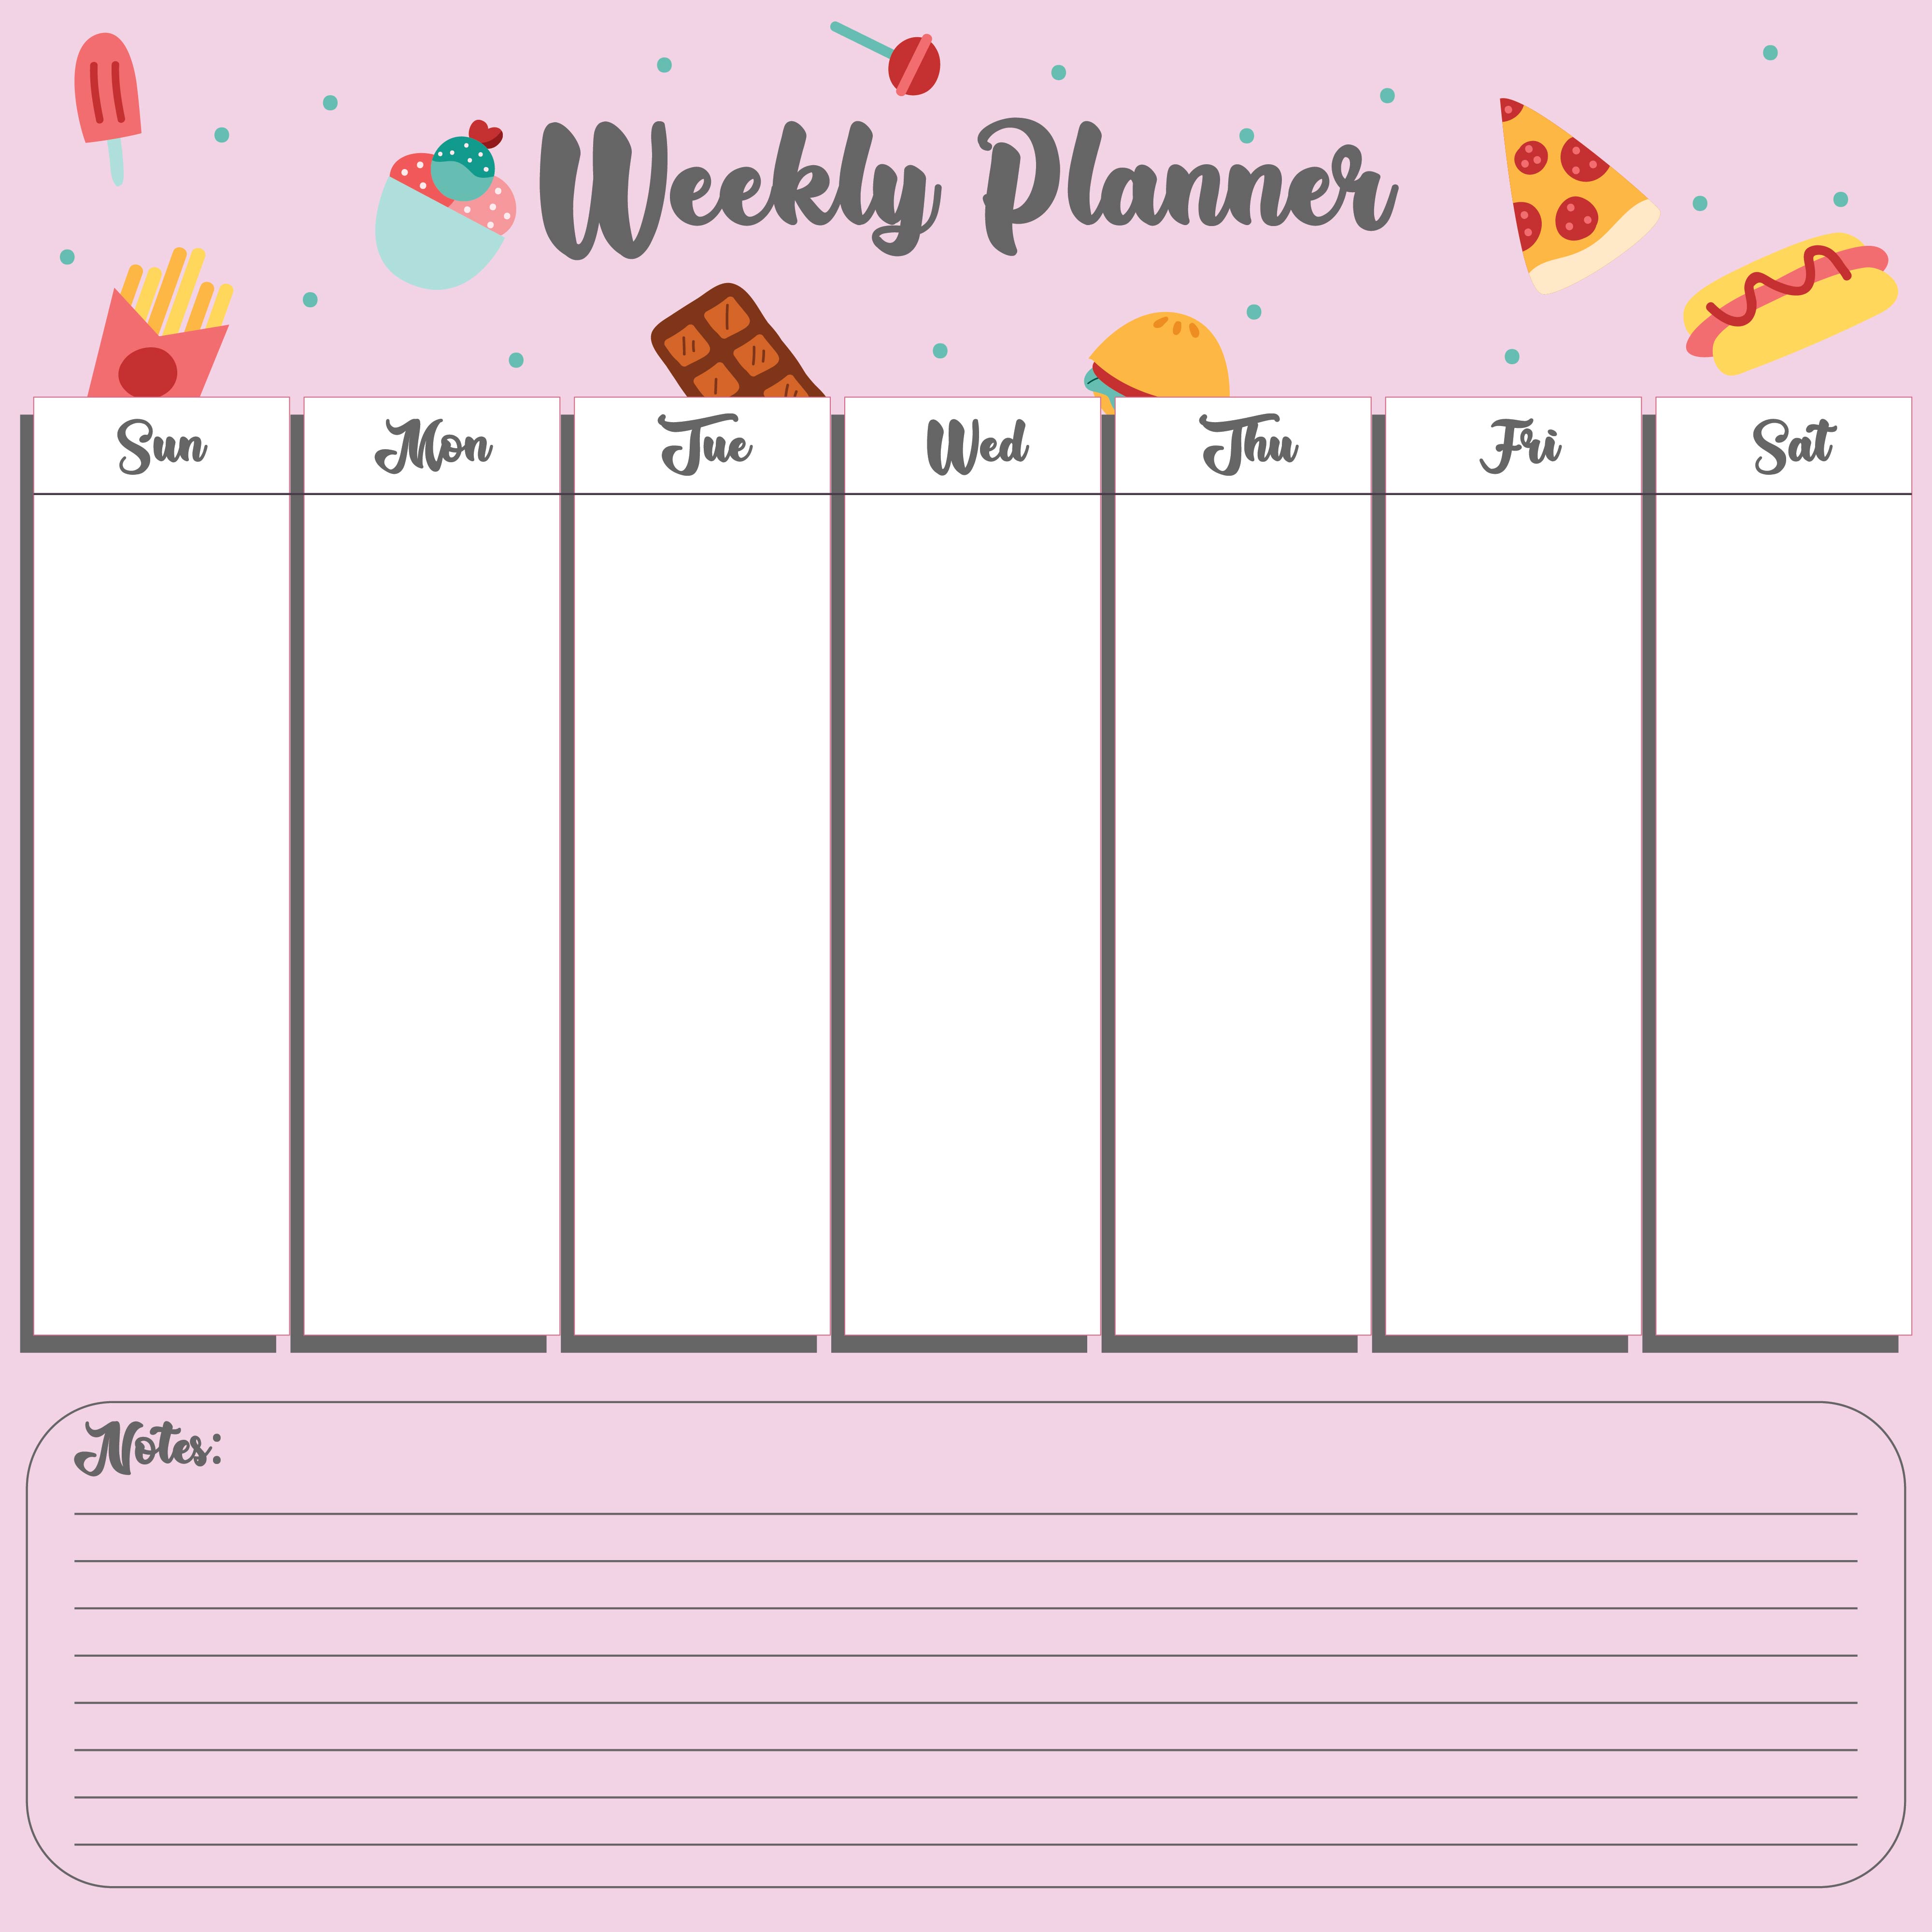 download weekly planner pdf